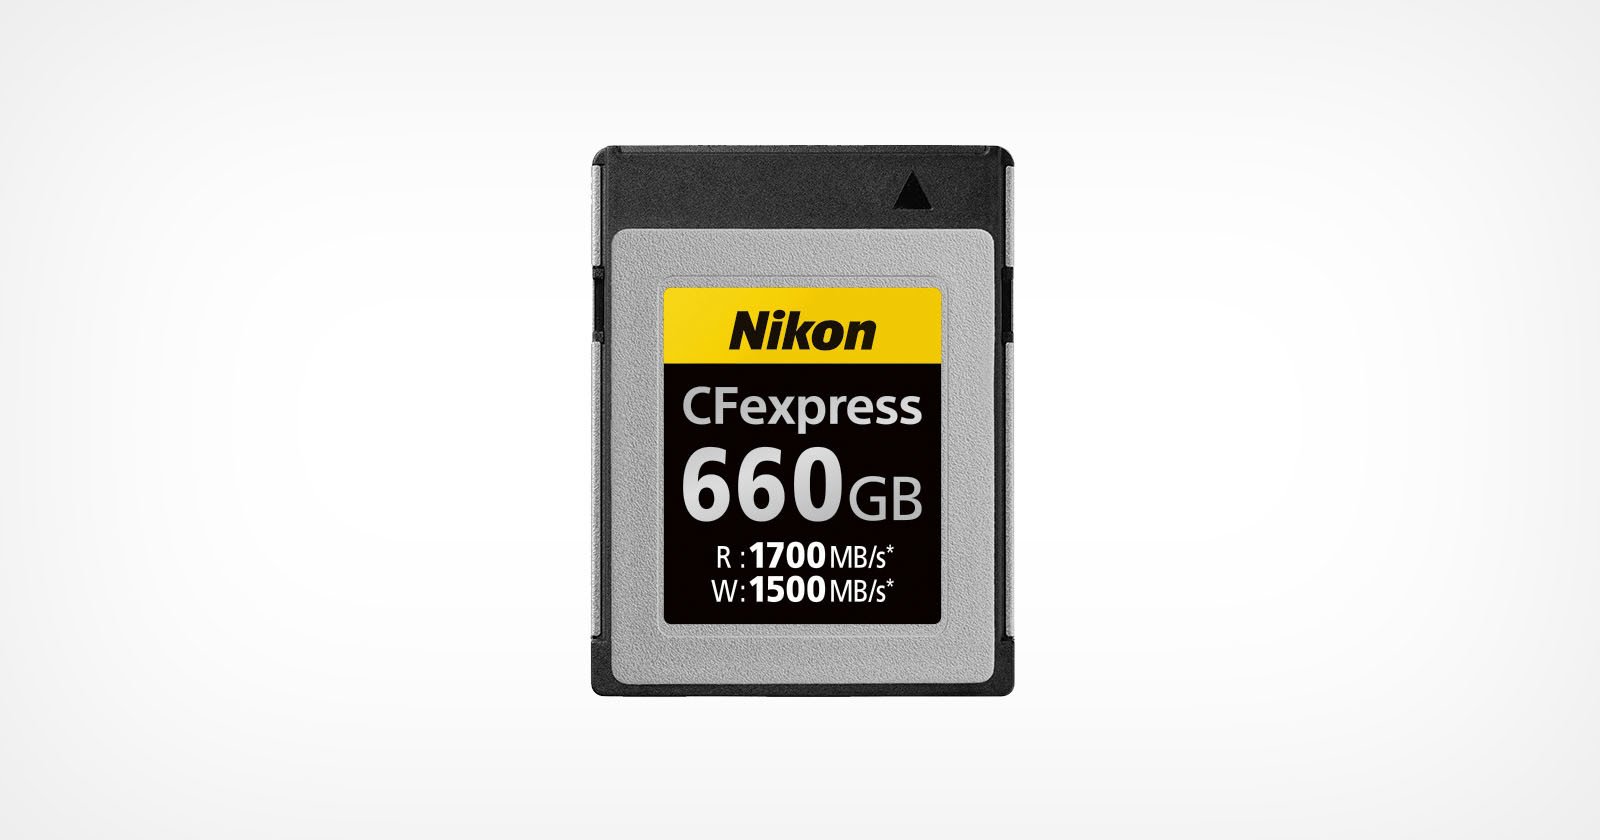 Nikon’s New 660GB CFexpress Memory Card Costs $727